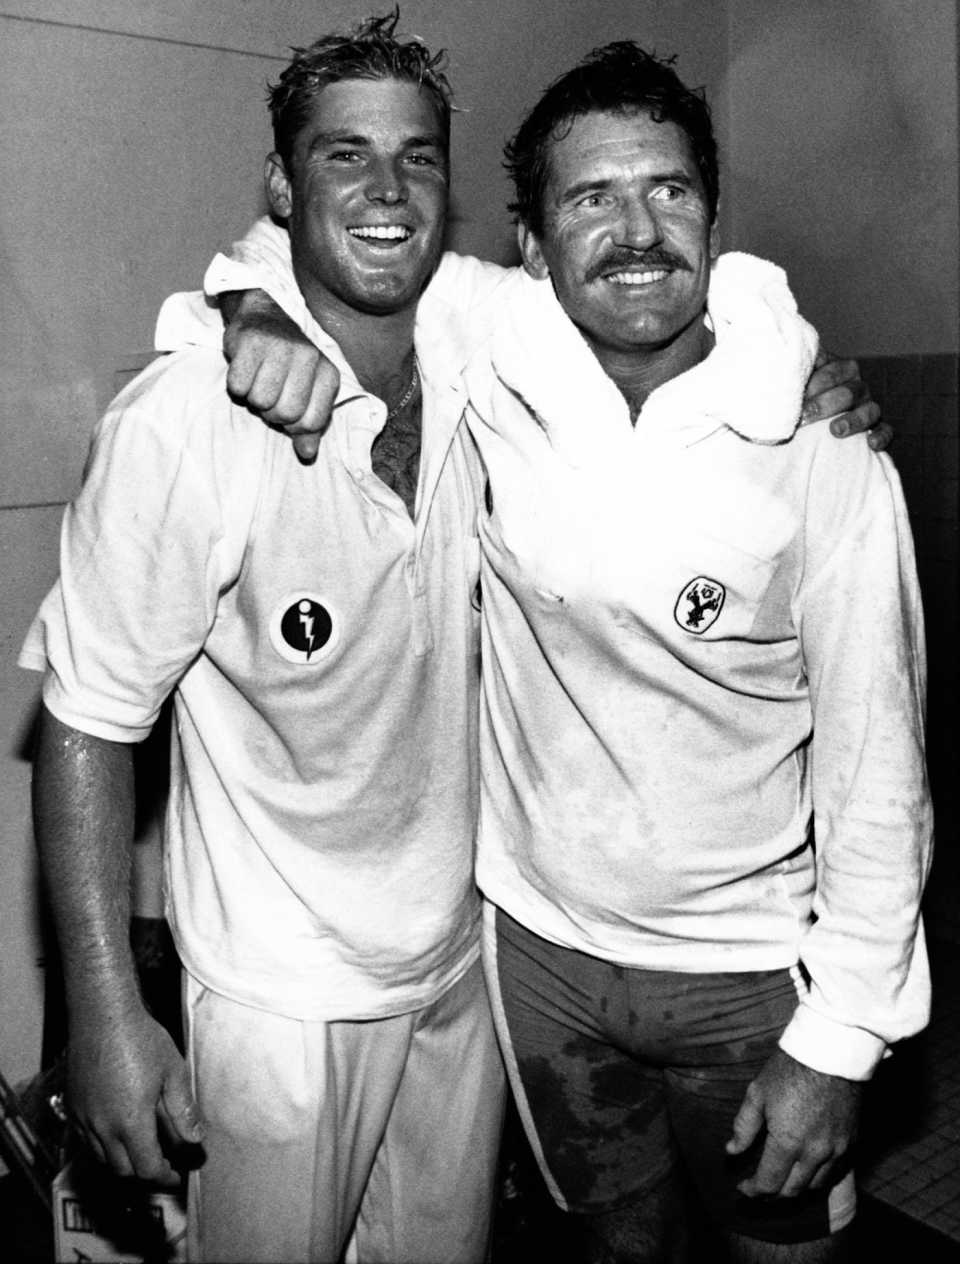 Shane Warne and Allan Border celebrate Australia's win, Australia v West Indies, 2nd Test, Melbourne, 5th day, December 30, 1992